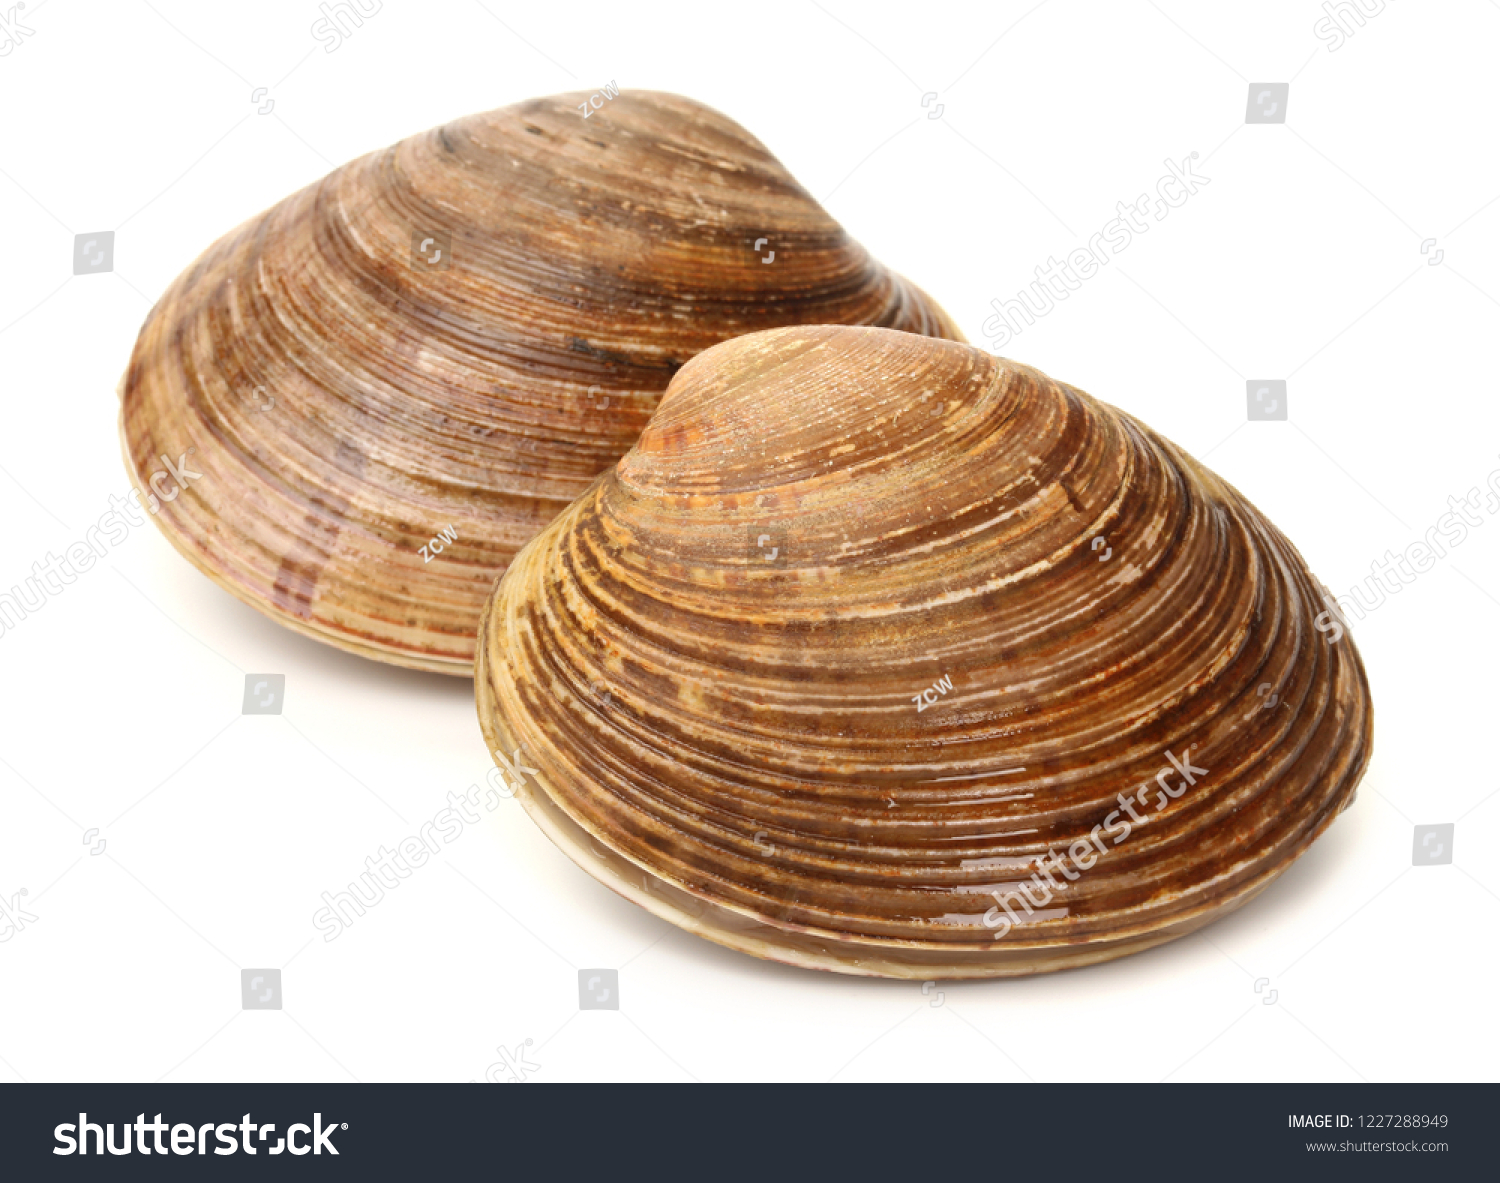 fresh clams on white background #1227288949